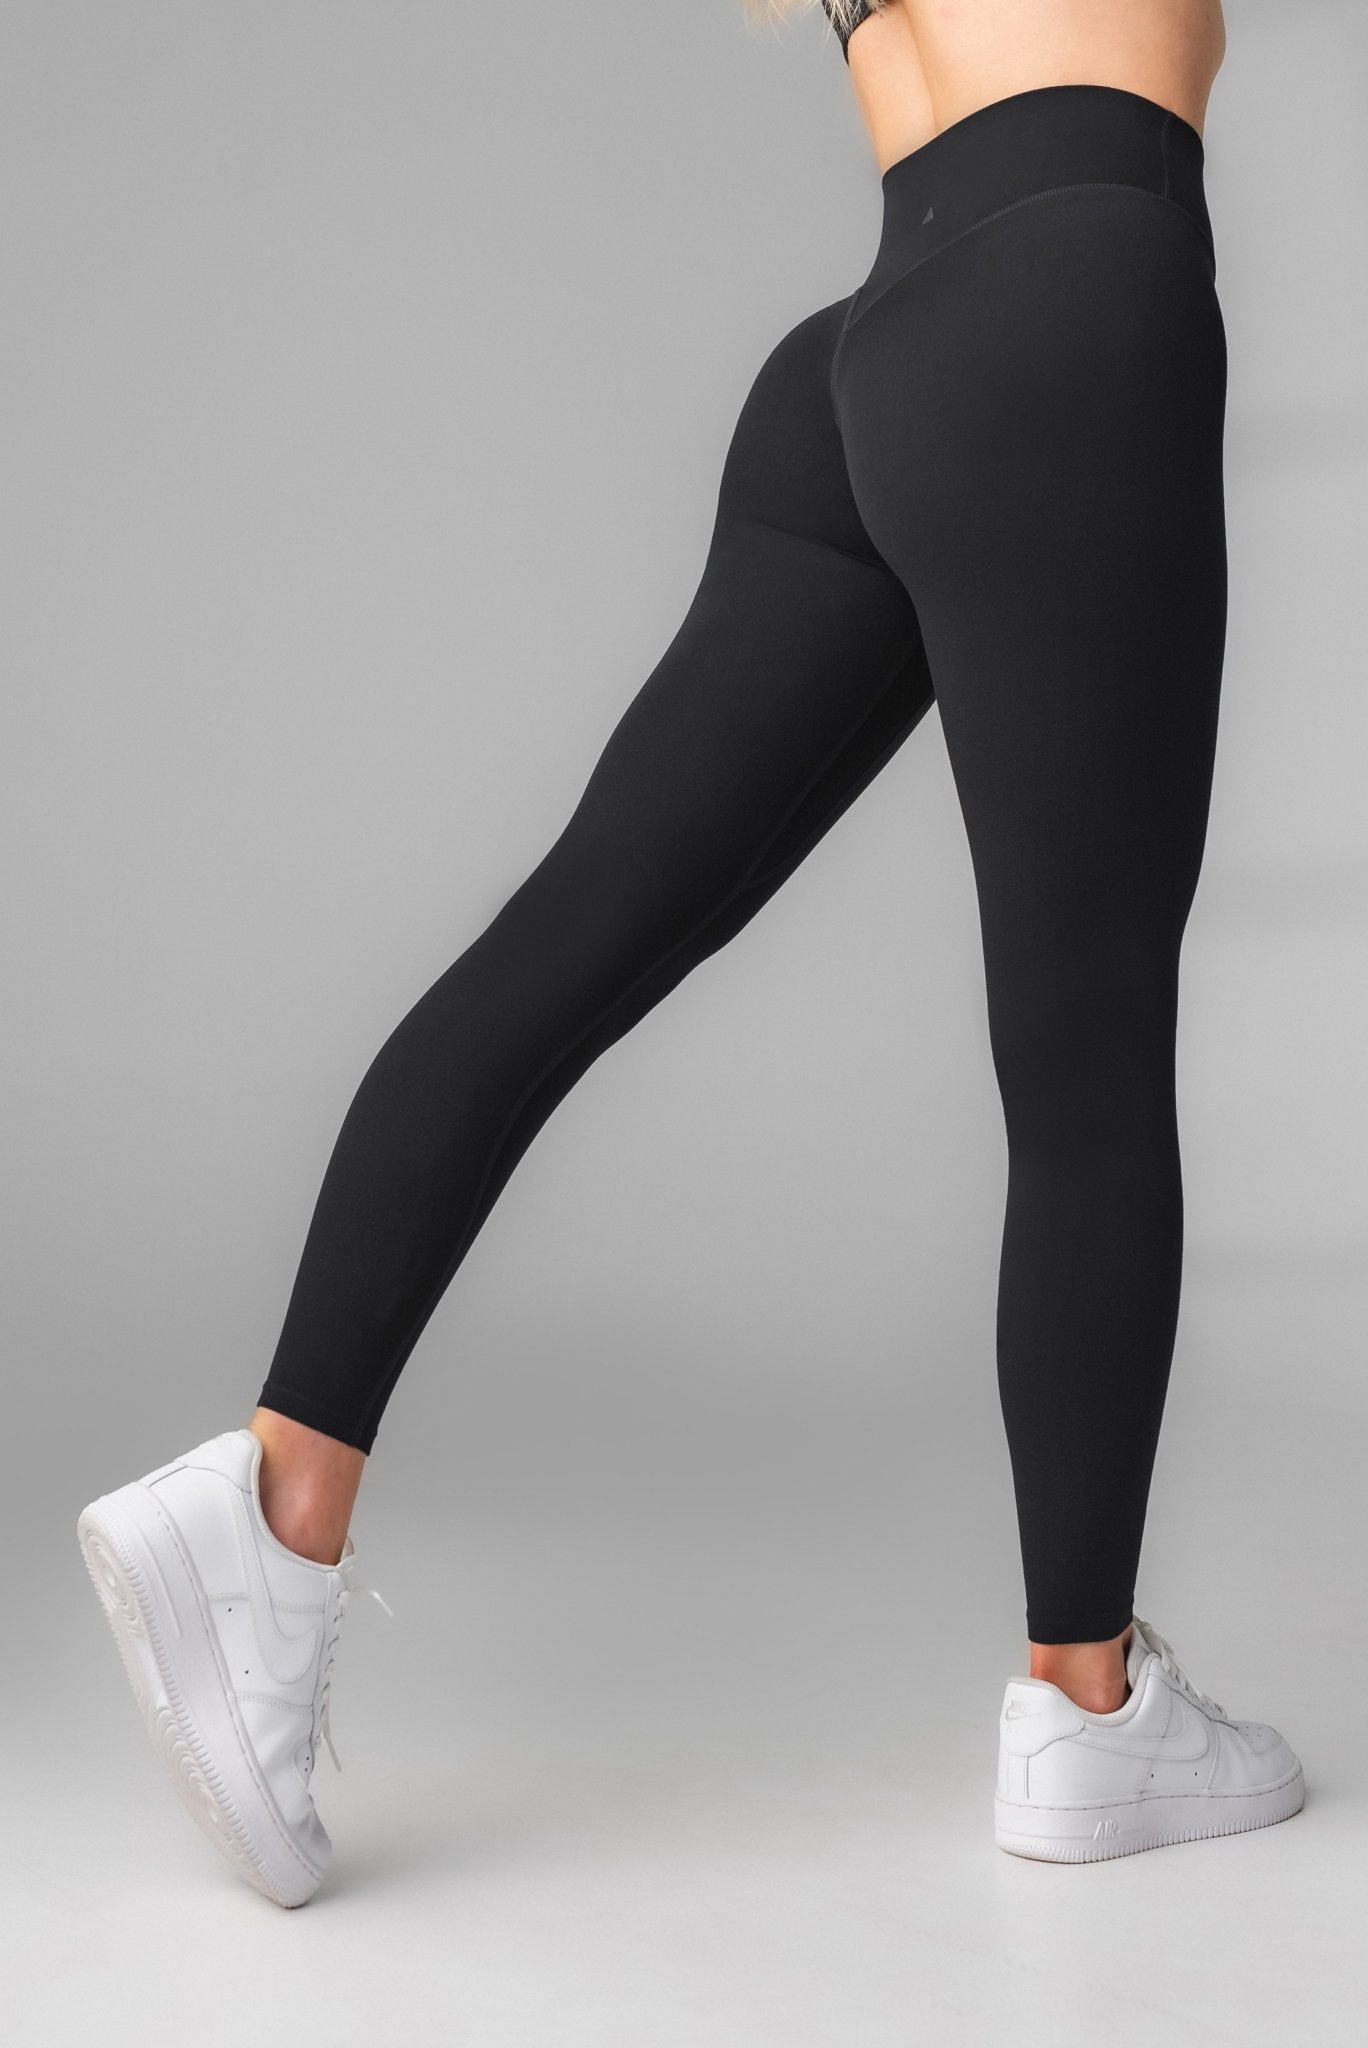 Buy Black Leggings for Women by PERFORMAX Online | Ajio.com